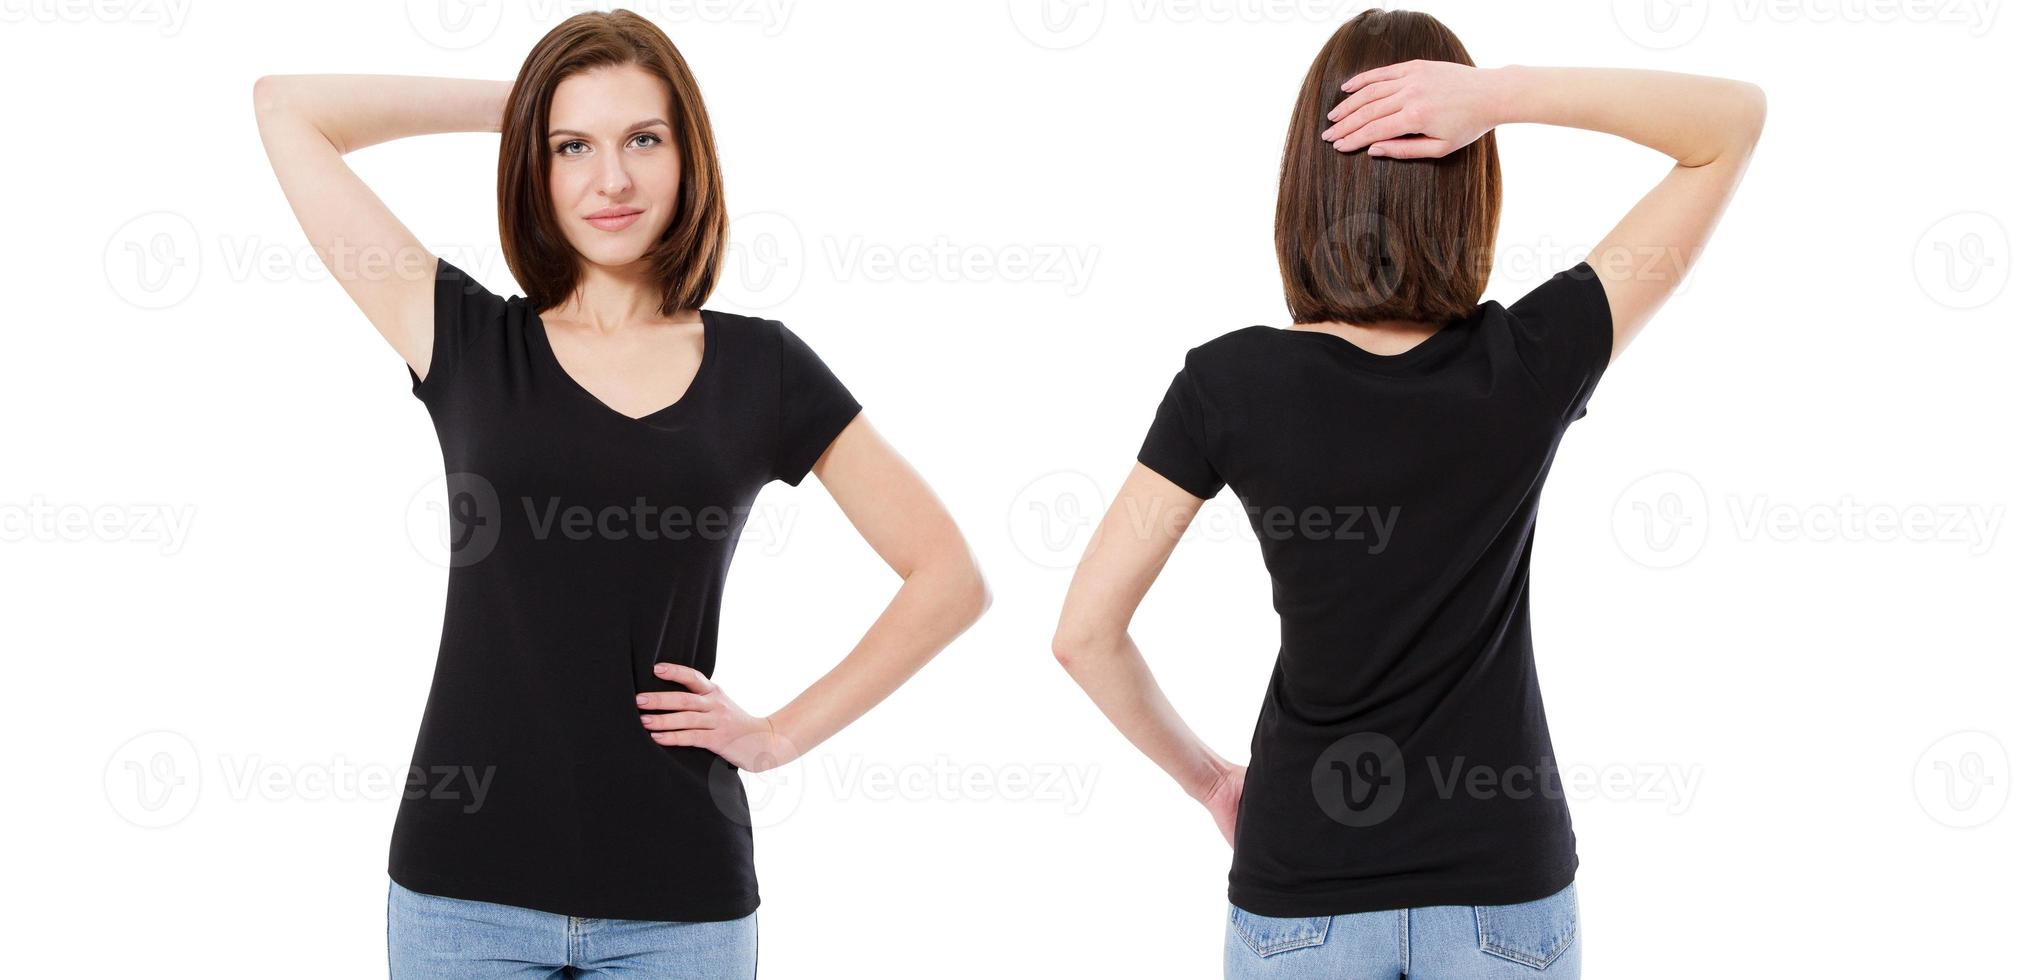 Conjunto de camiseta, linda morena con elegante camiseta negra aislada sobre fondo blanco, maqueta, en blanco foto